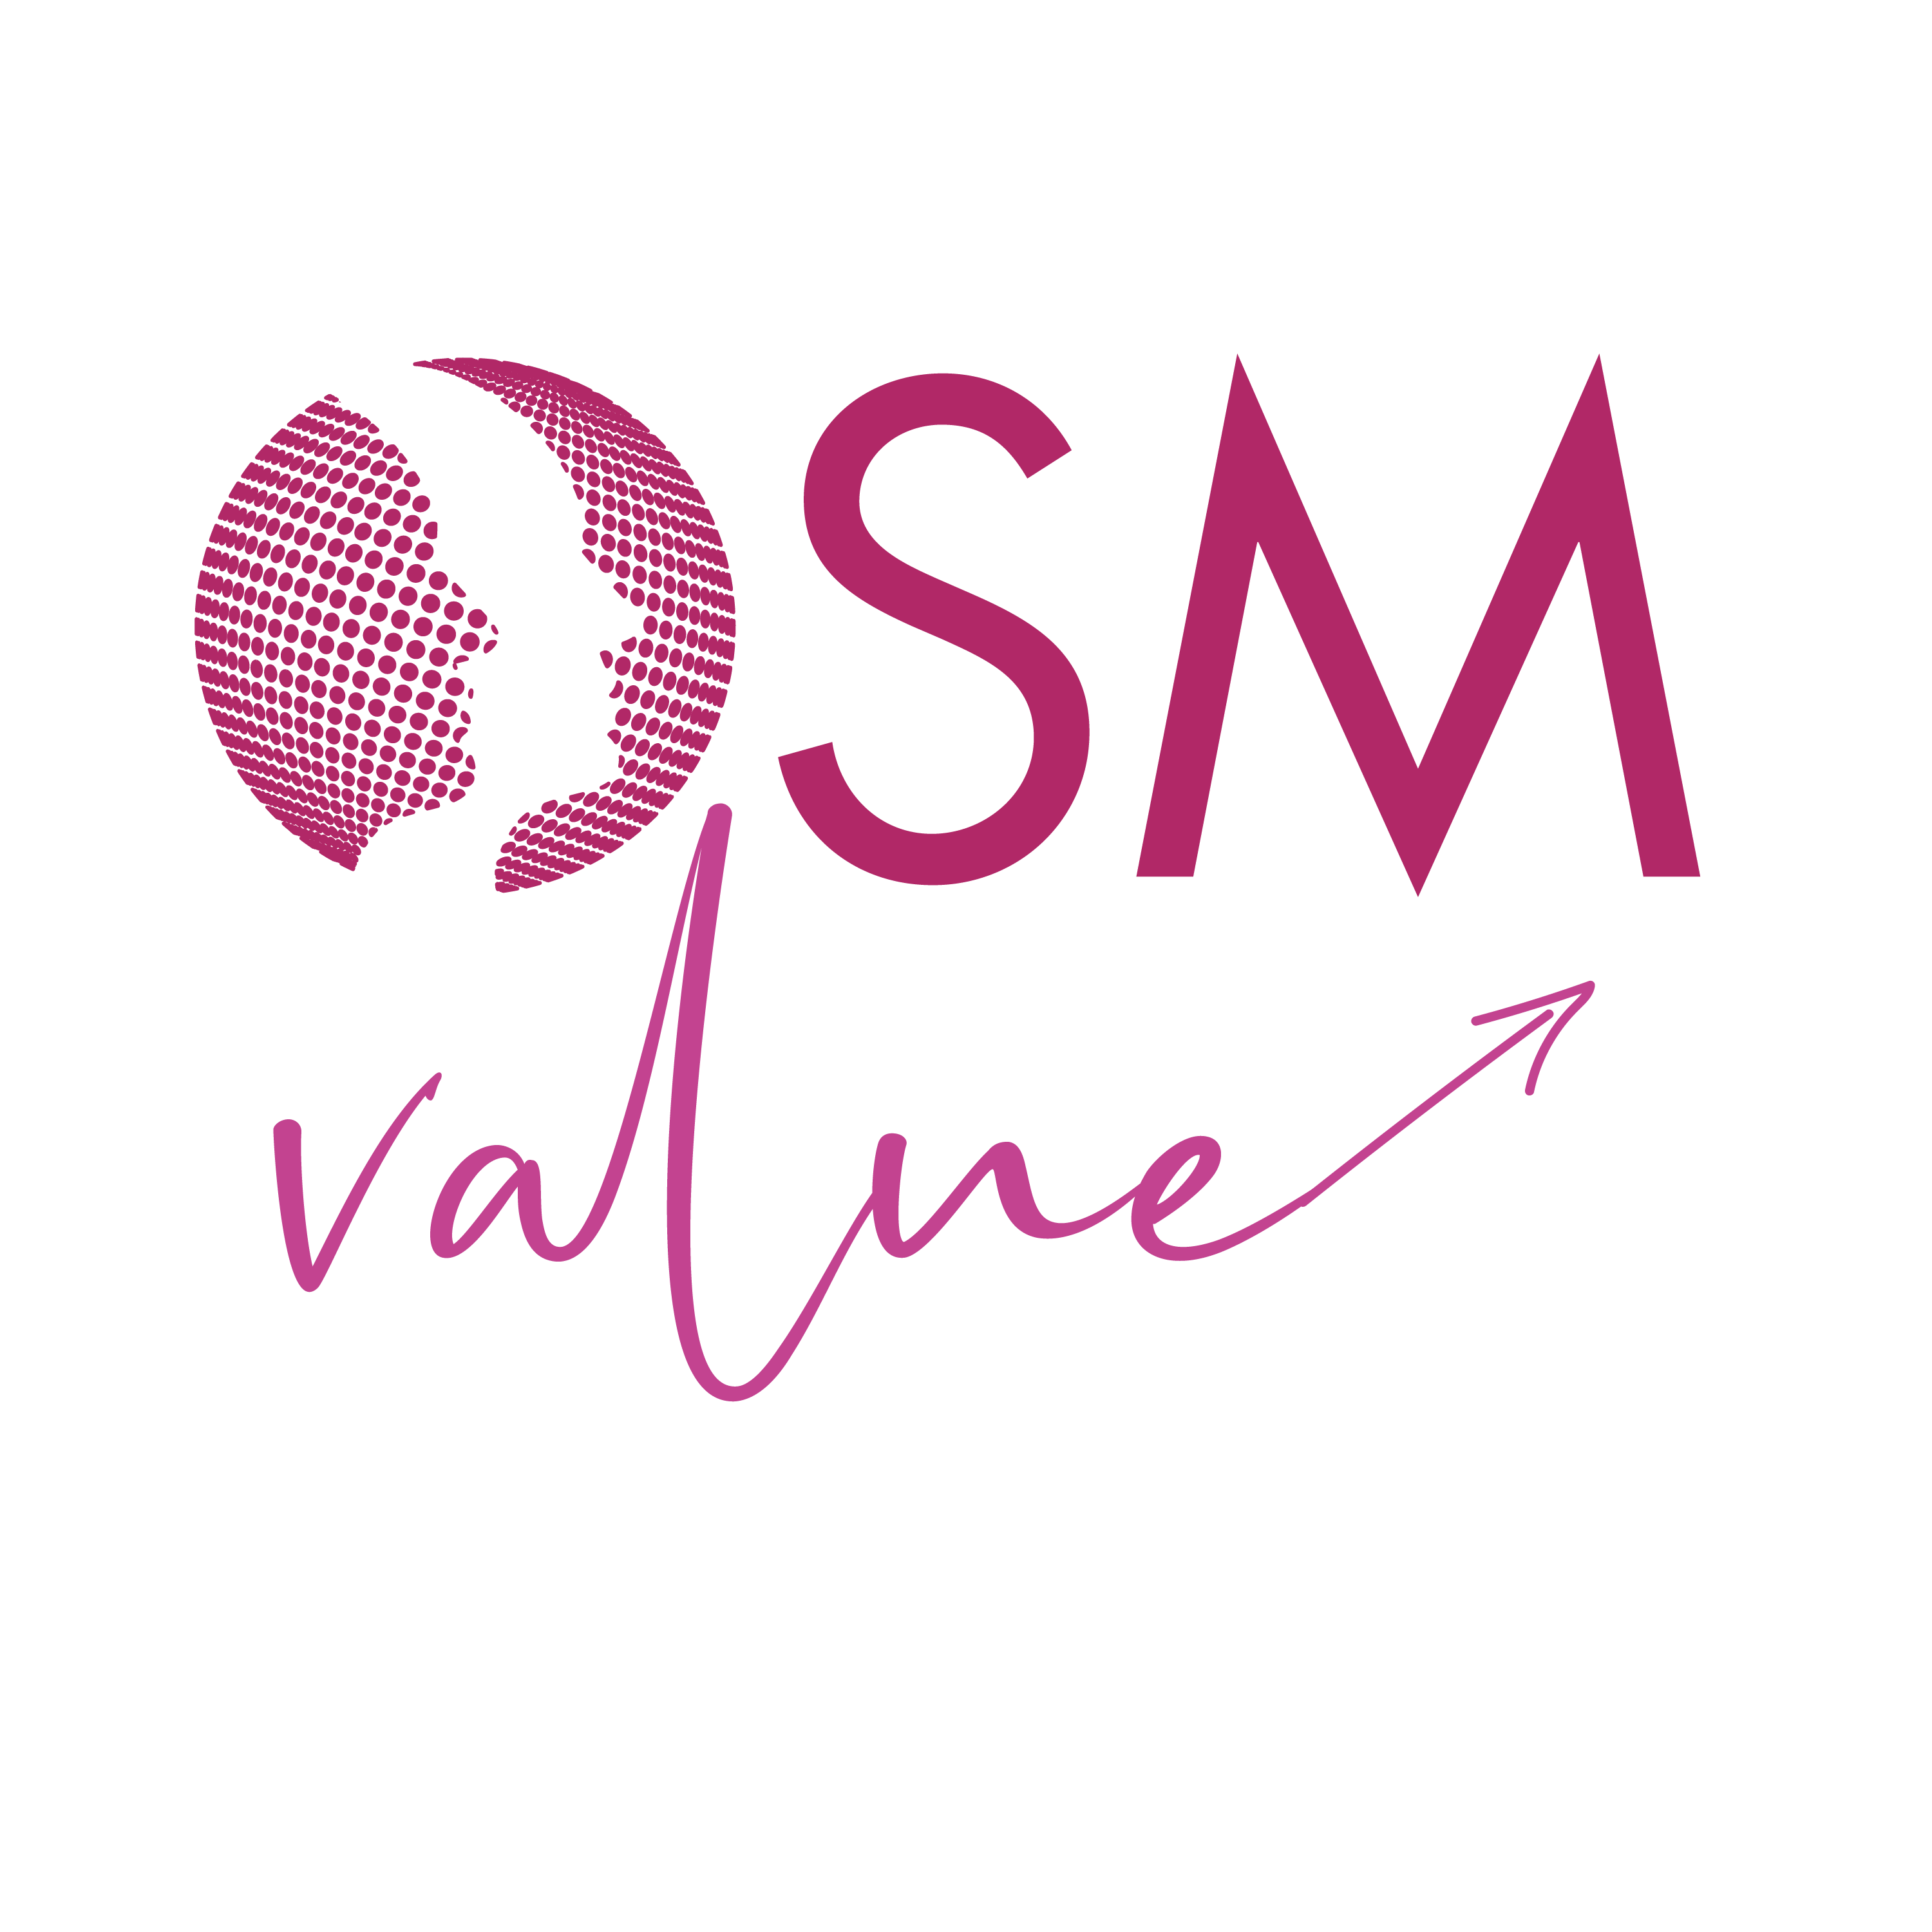 OSM Value